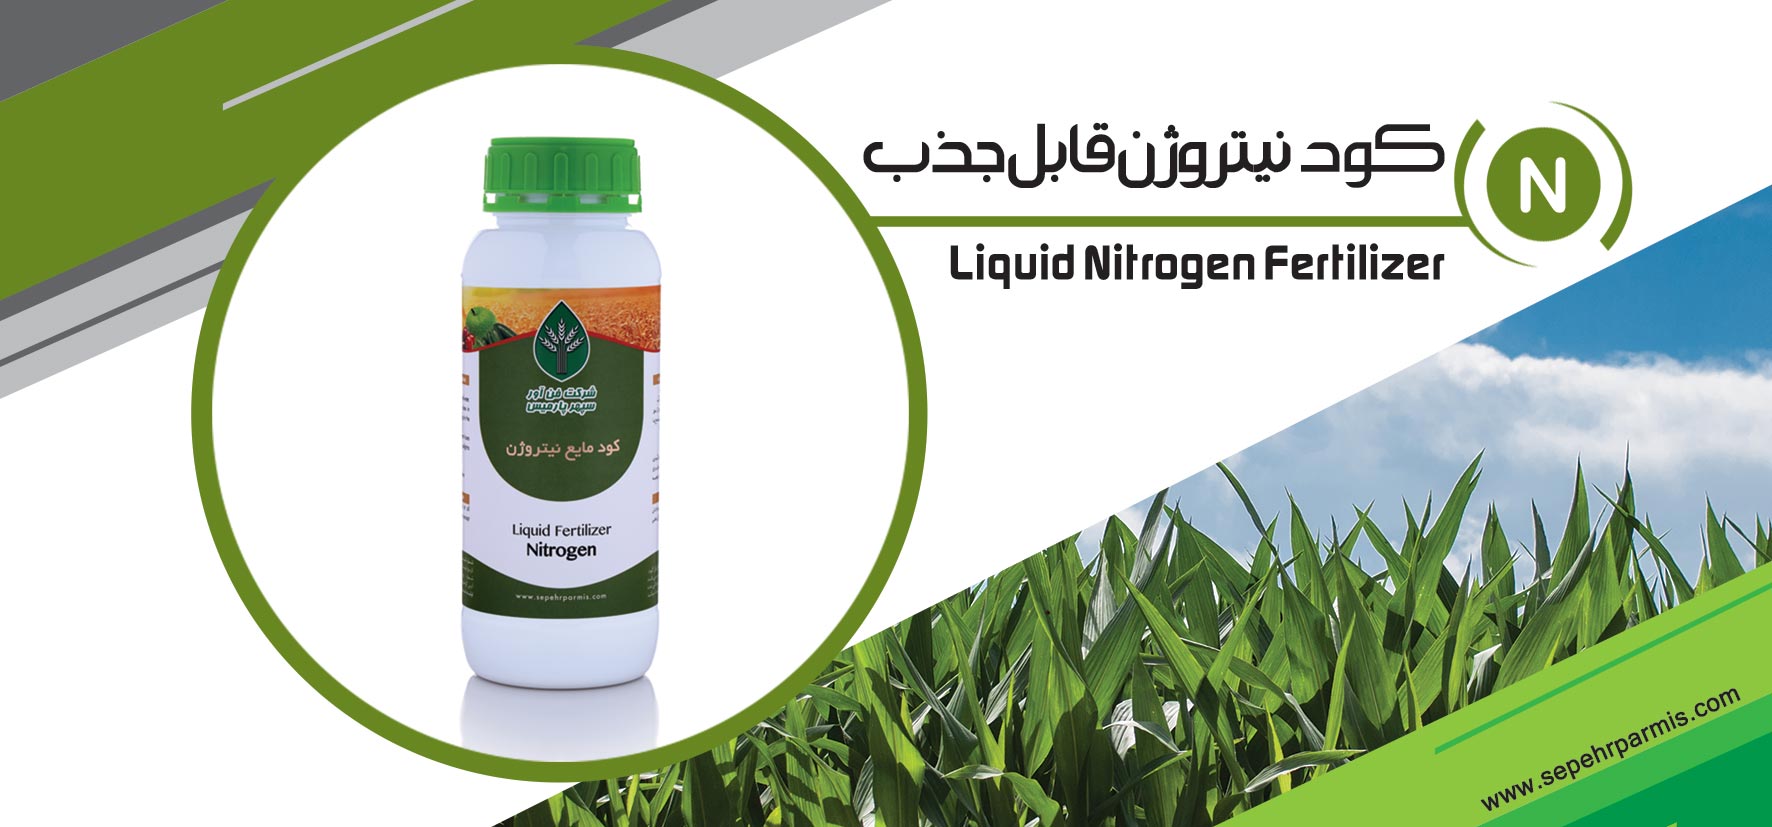 nitrogen fertilizer